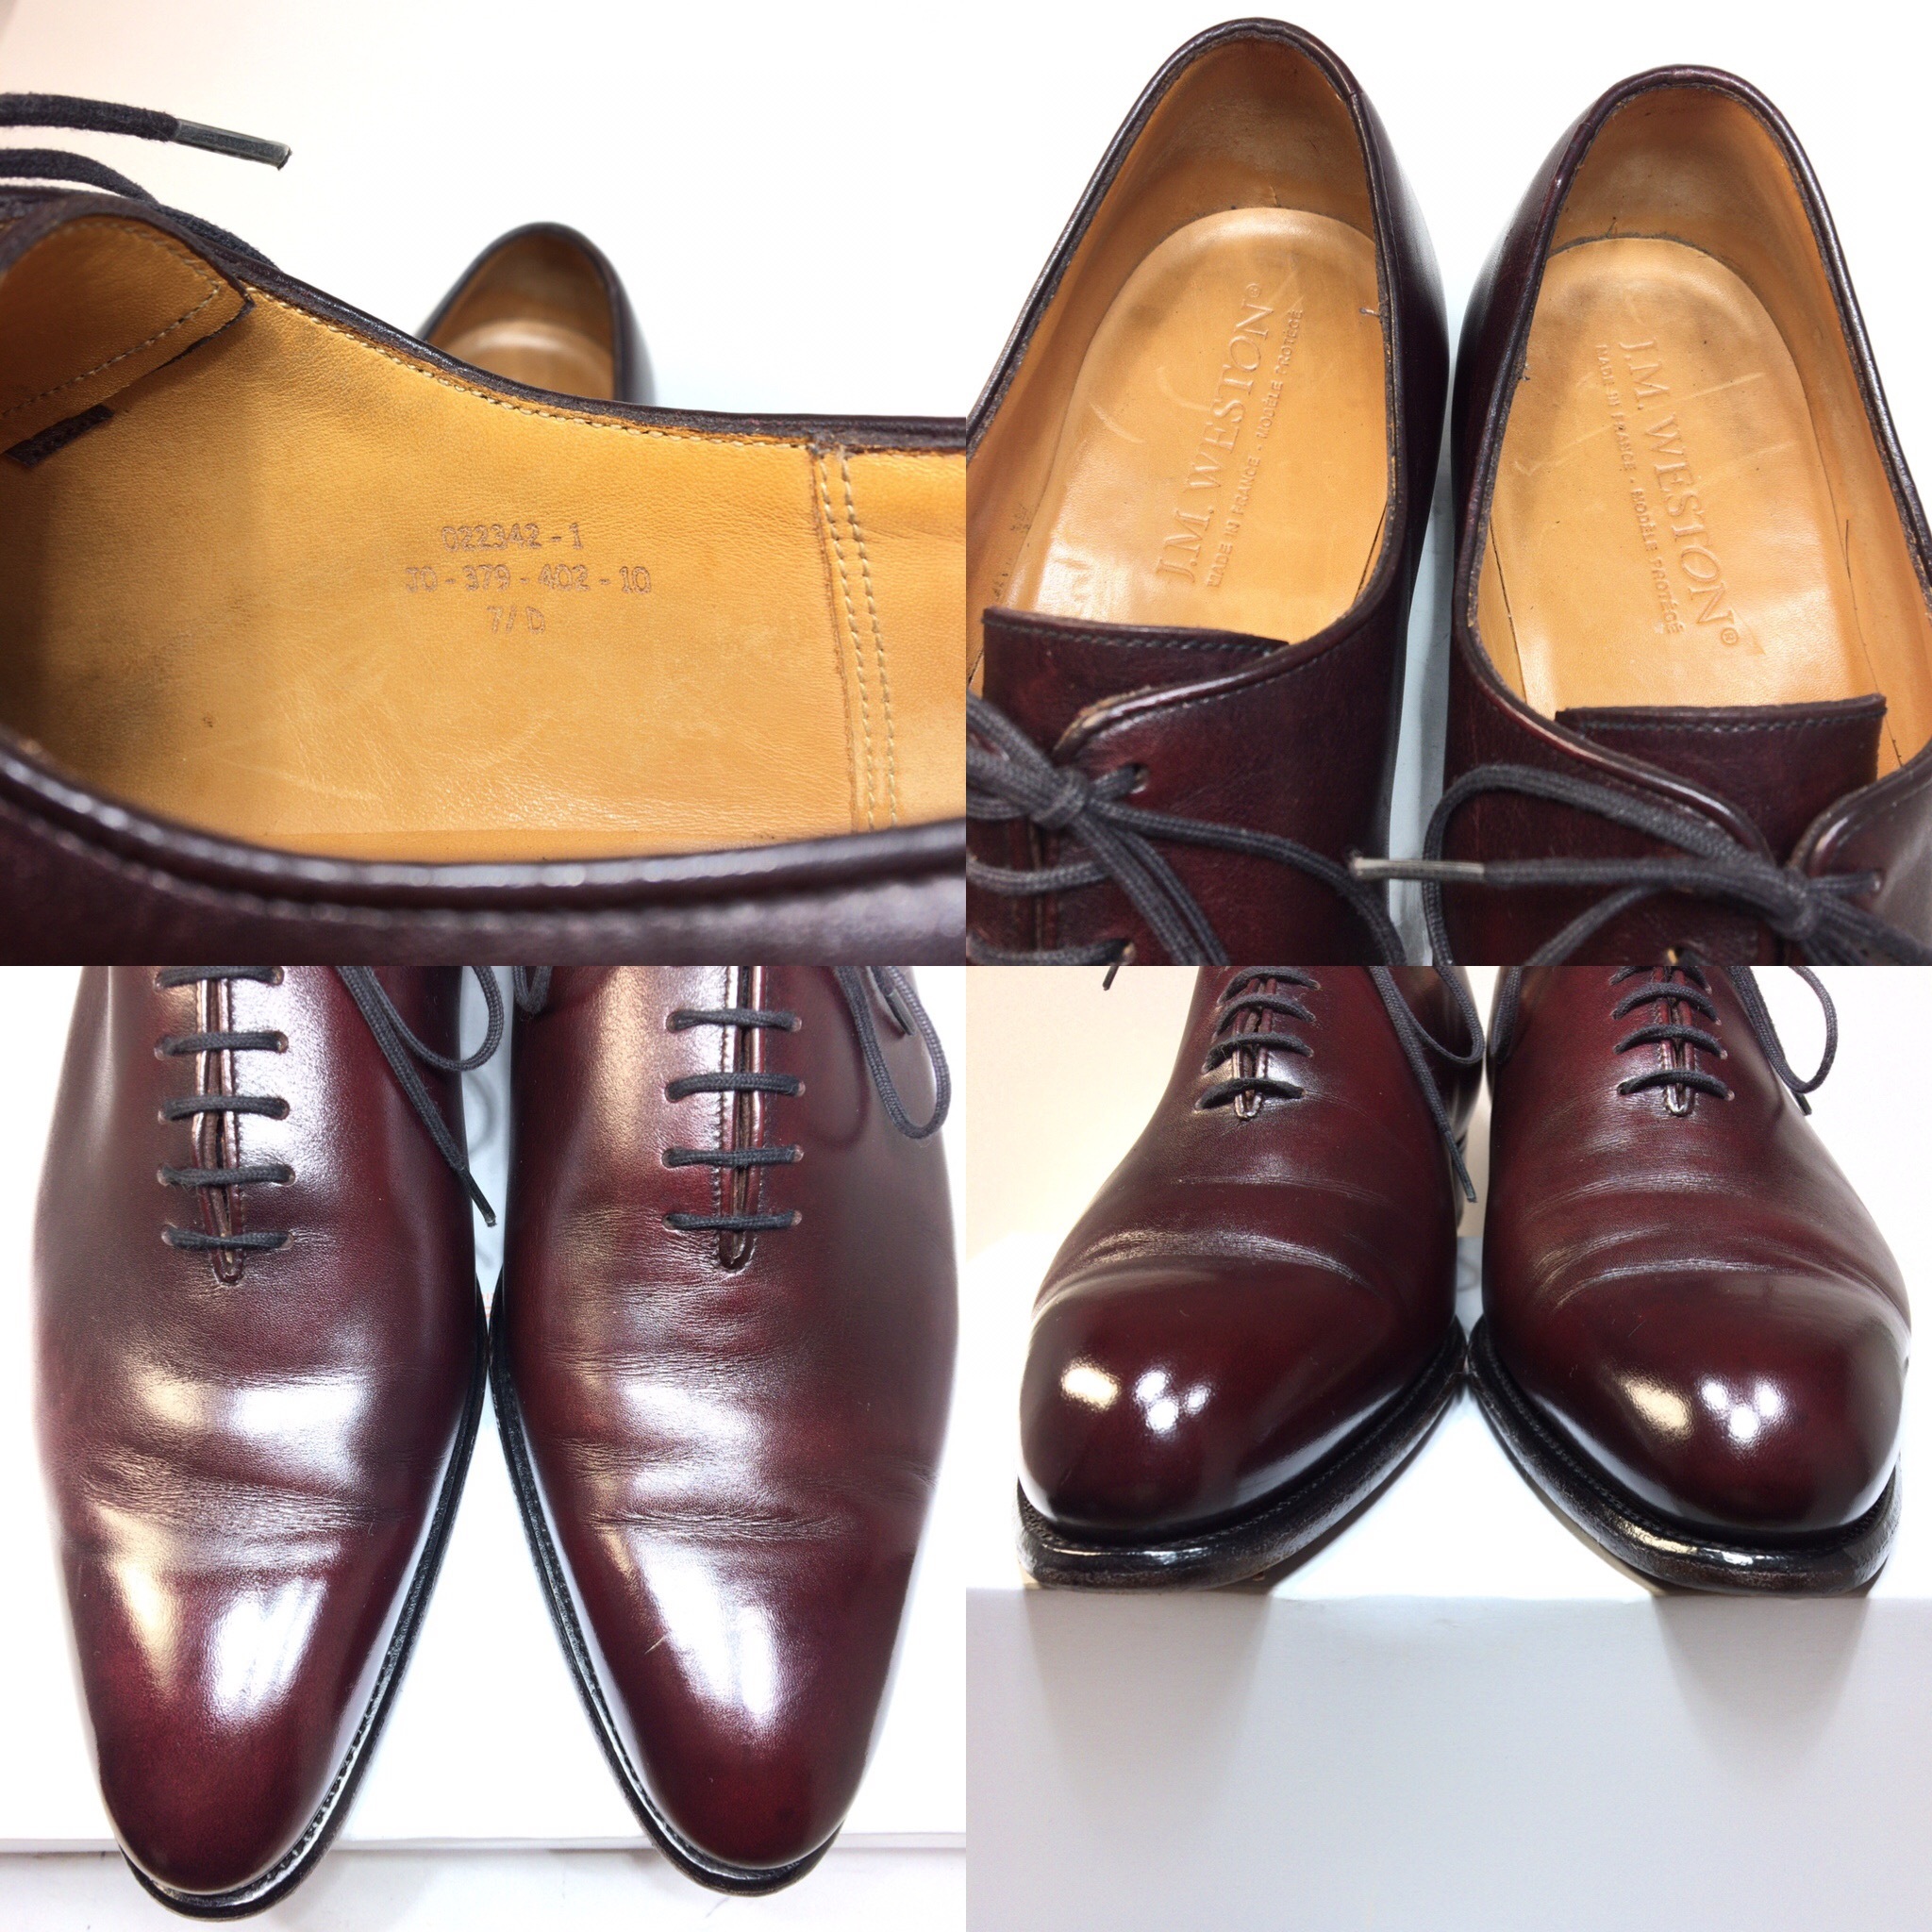 jmウェストン402 J.M.Weston ホールカット 25.5センチ | 中古靴・革靴・ブーツ通販専門店 DafsMart ダフスマート